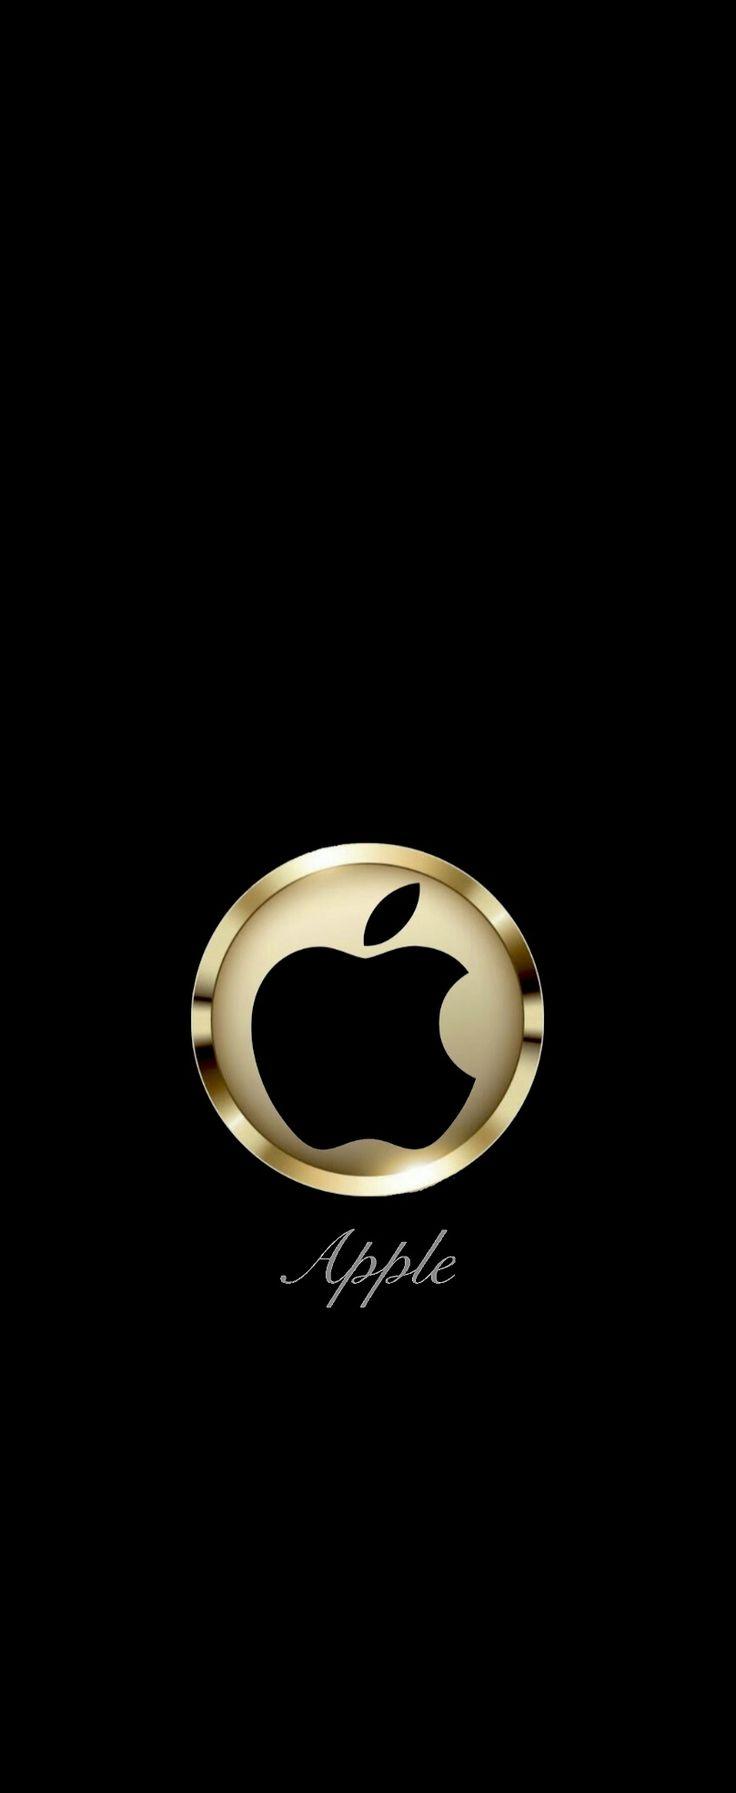 🔥 Free download Brave Lord on My apple logos Apple logo wallpaper ...